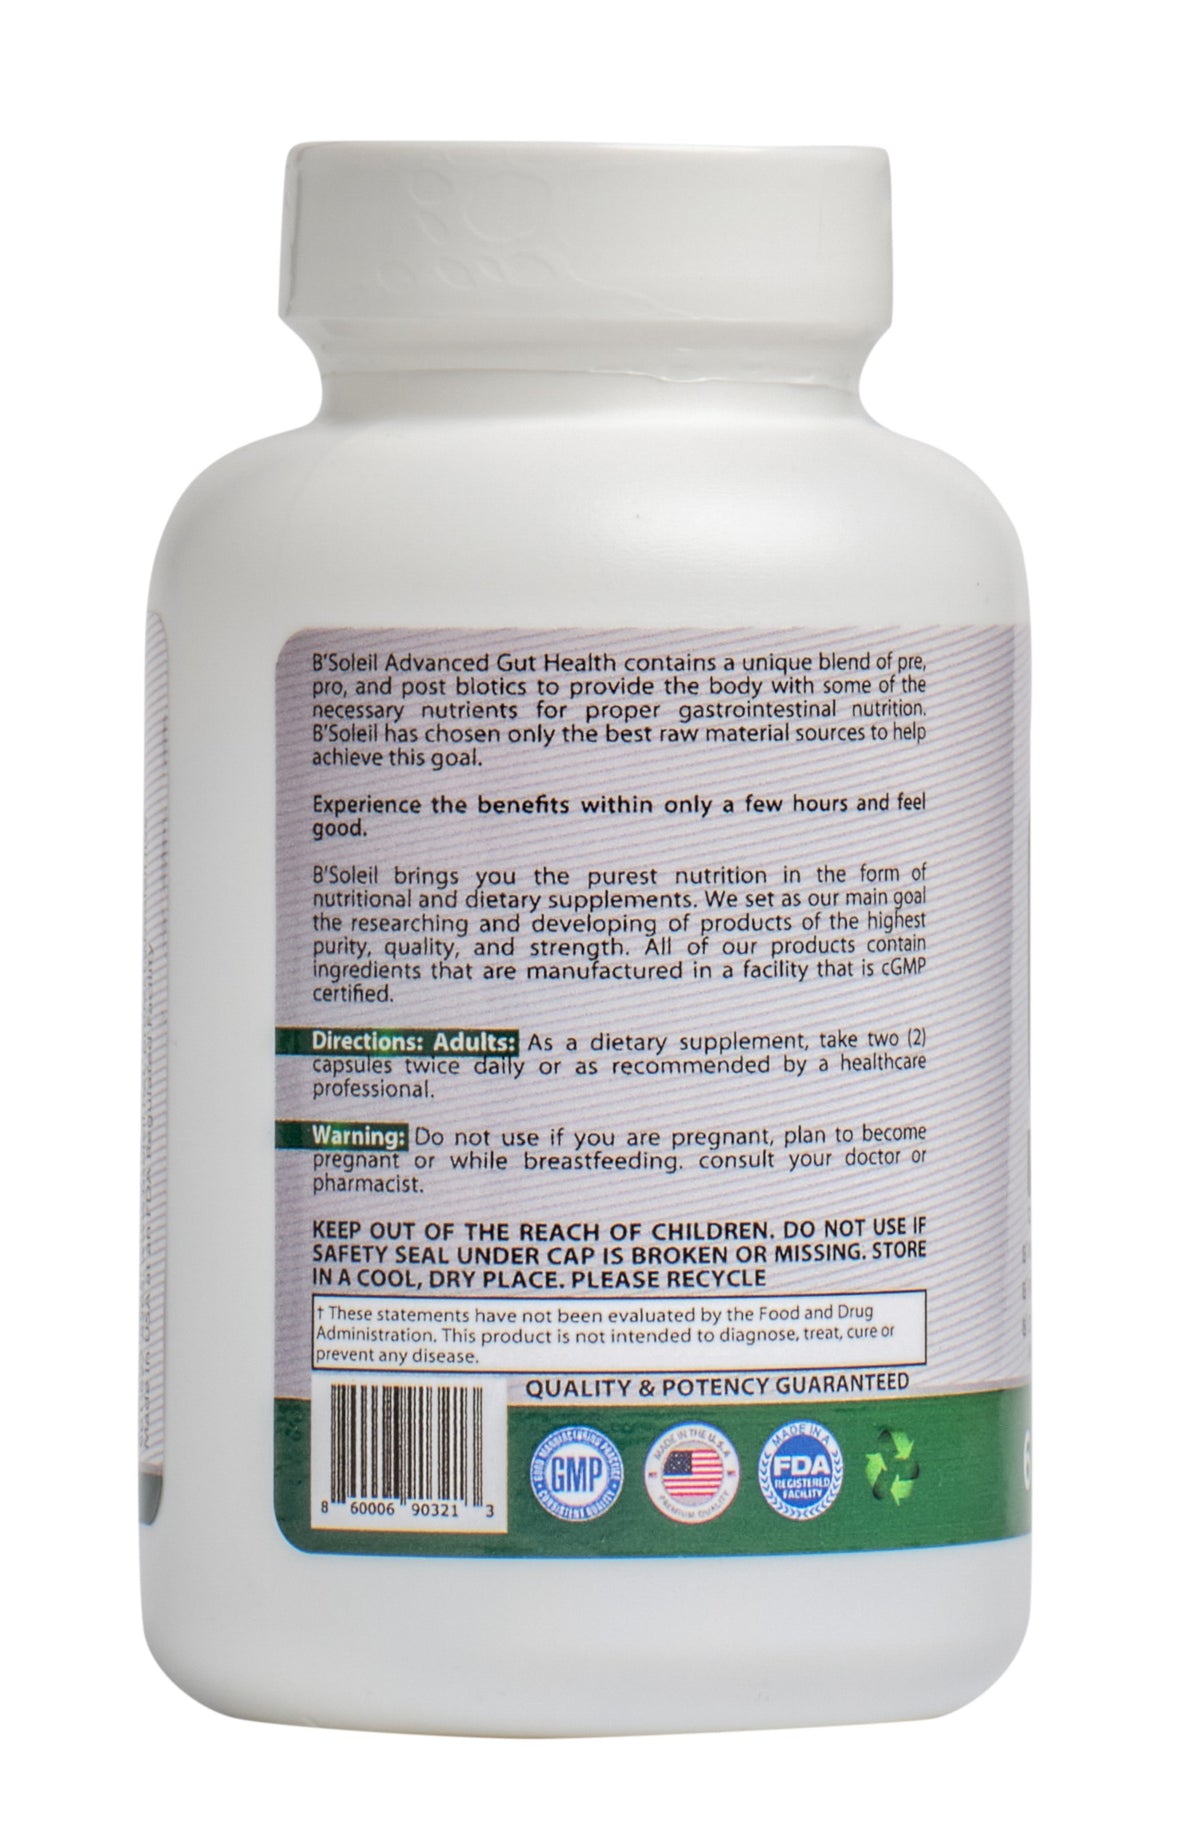 B’Soleil™ Advanced Gut Health - Pre, Pro, and Post Biotics Bottle Picture - Back